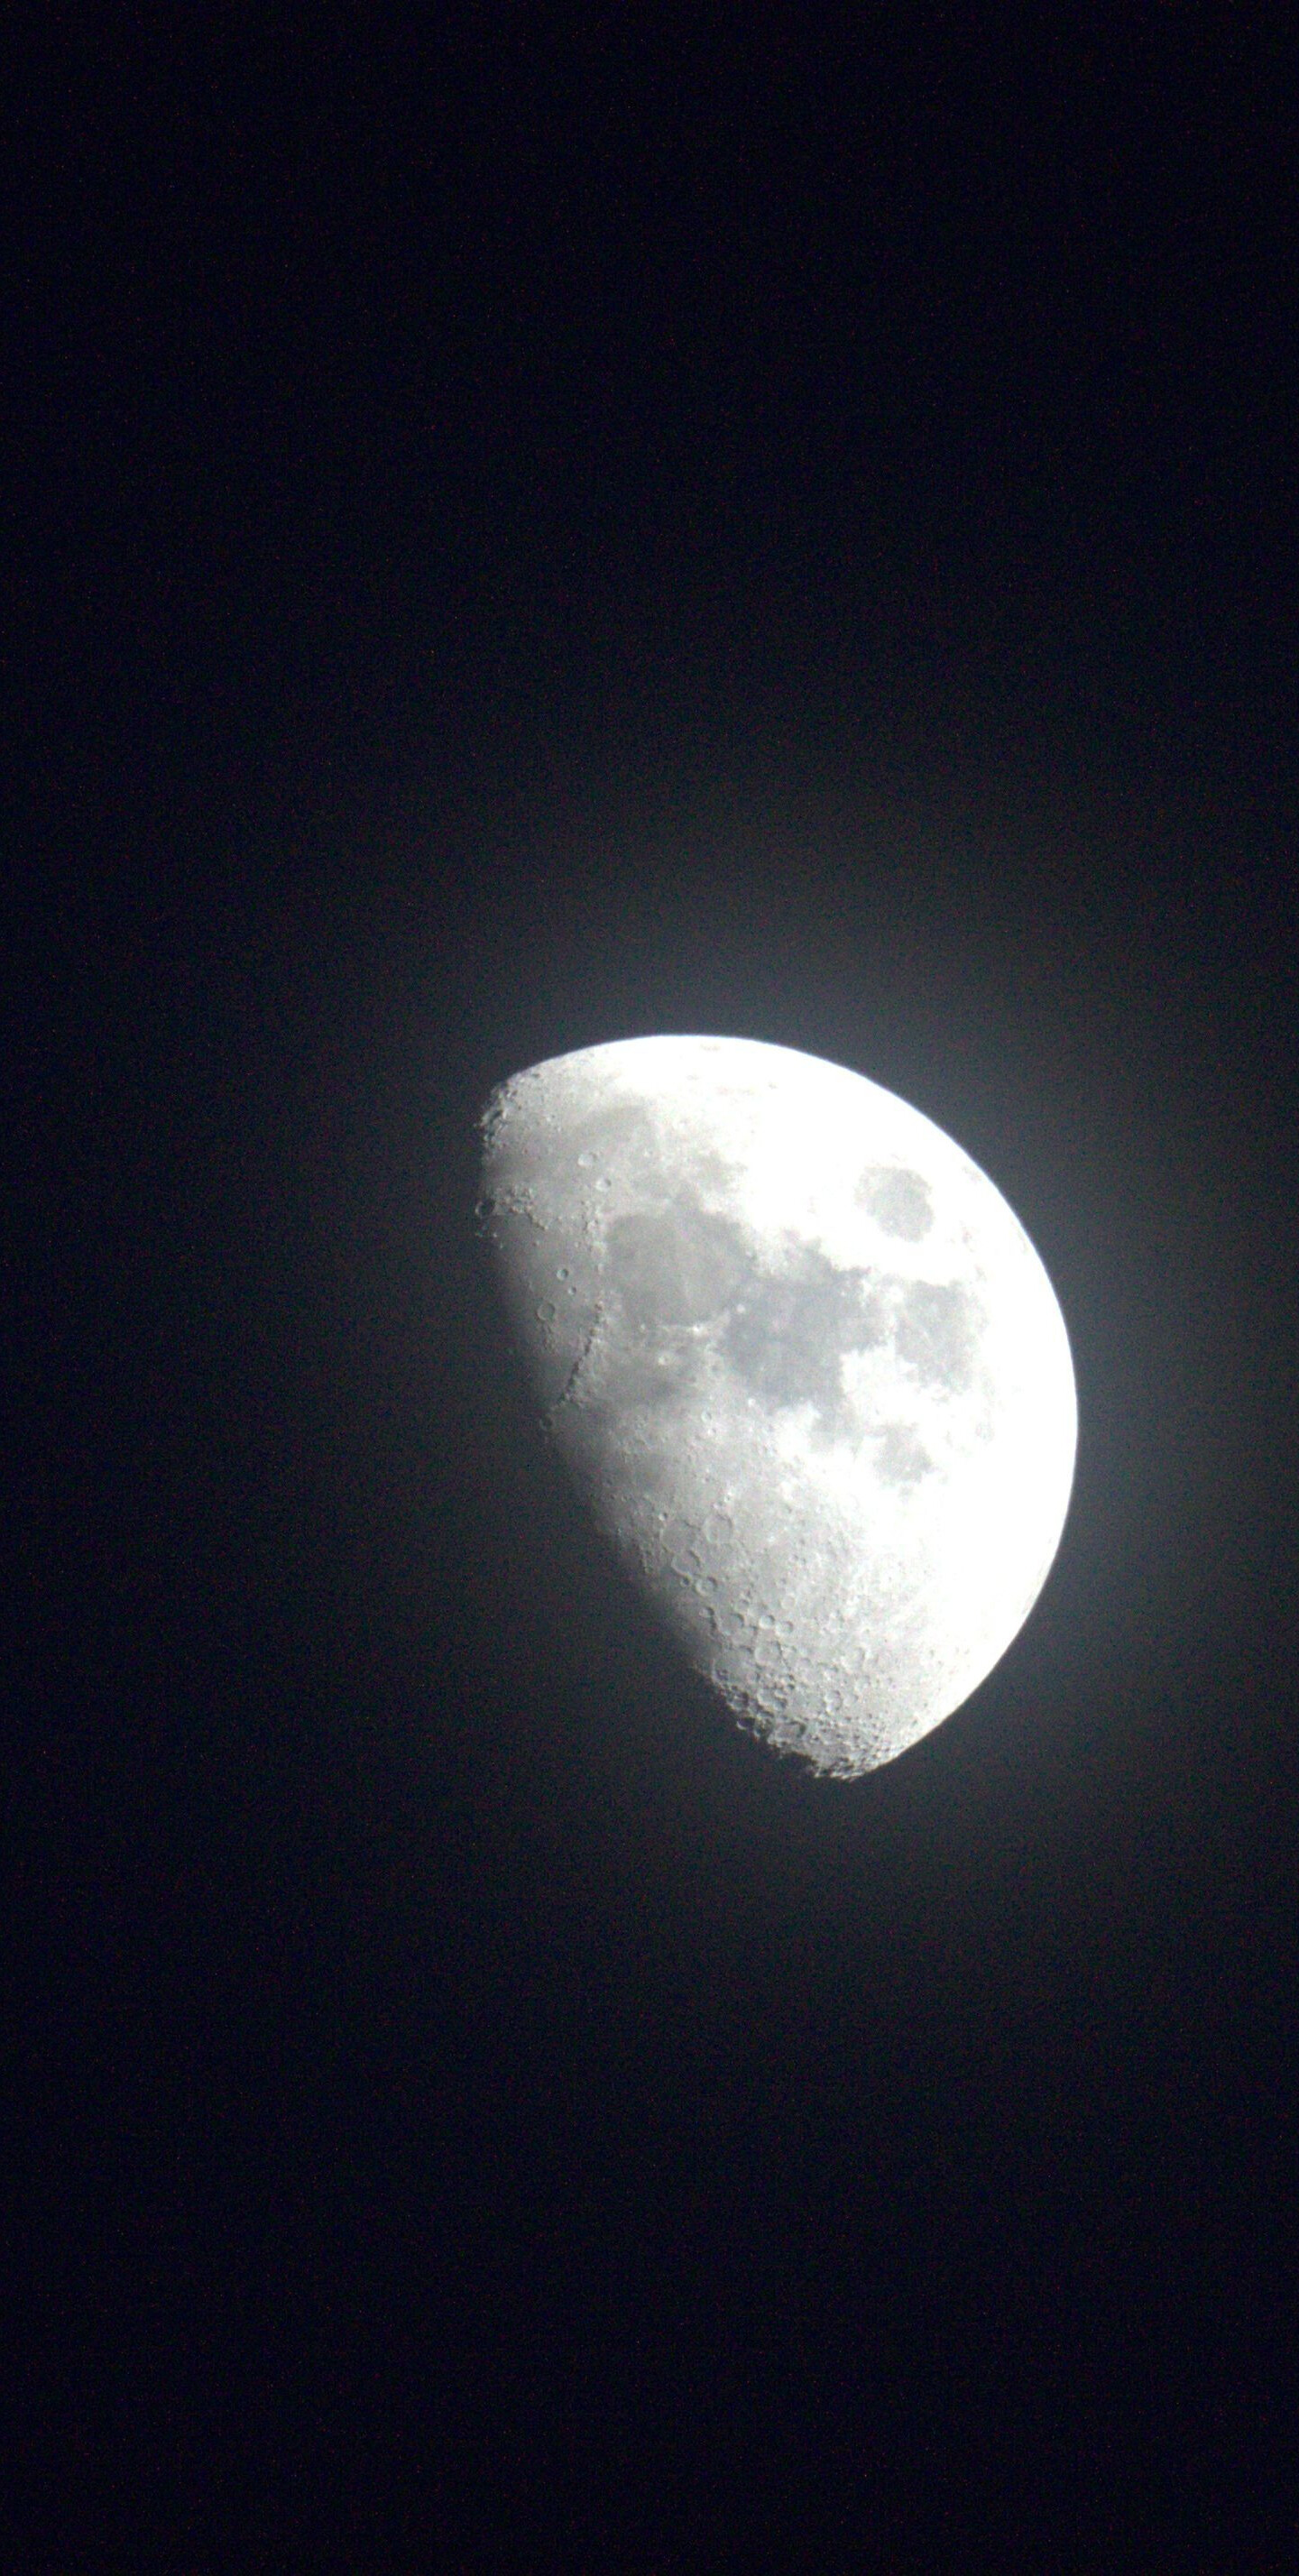 Moonlight: Half moon, The nighttime appearance of celestial objects, Darkening skies. 1440x2860 HD Wallpaper.